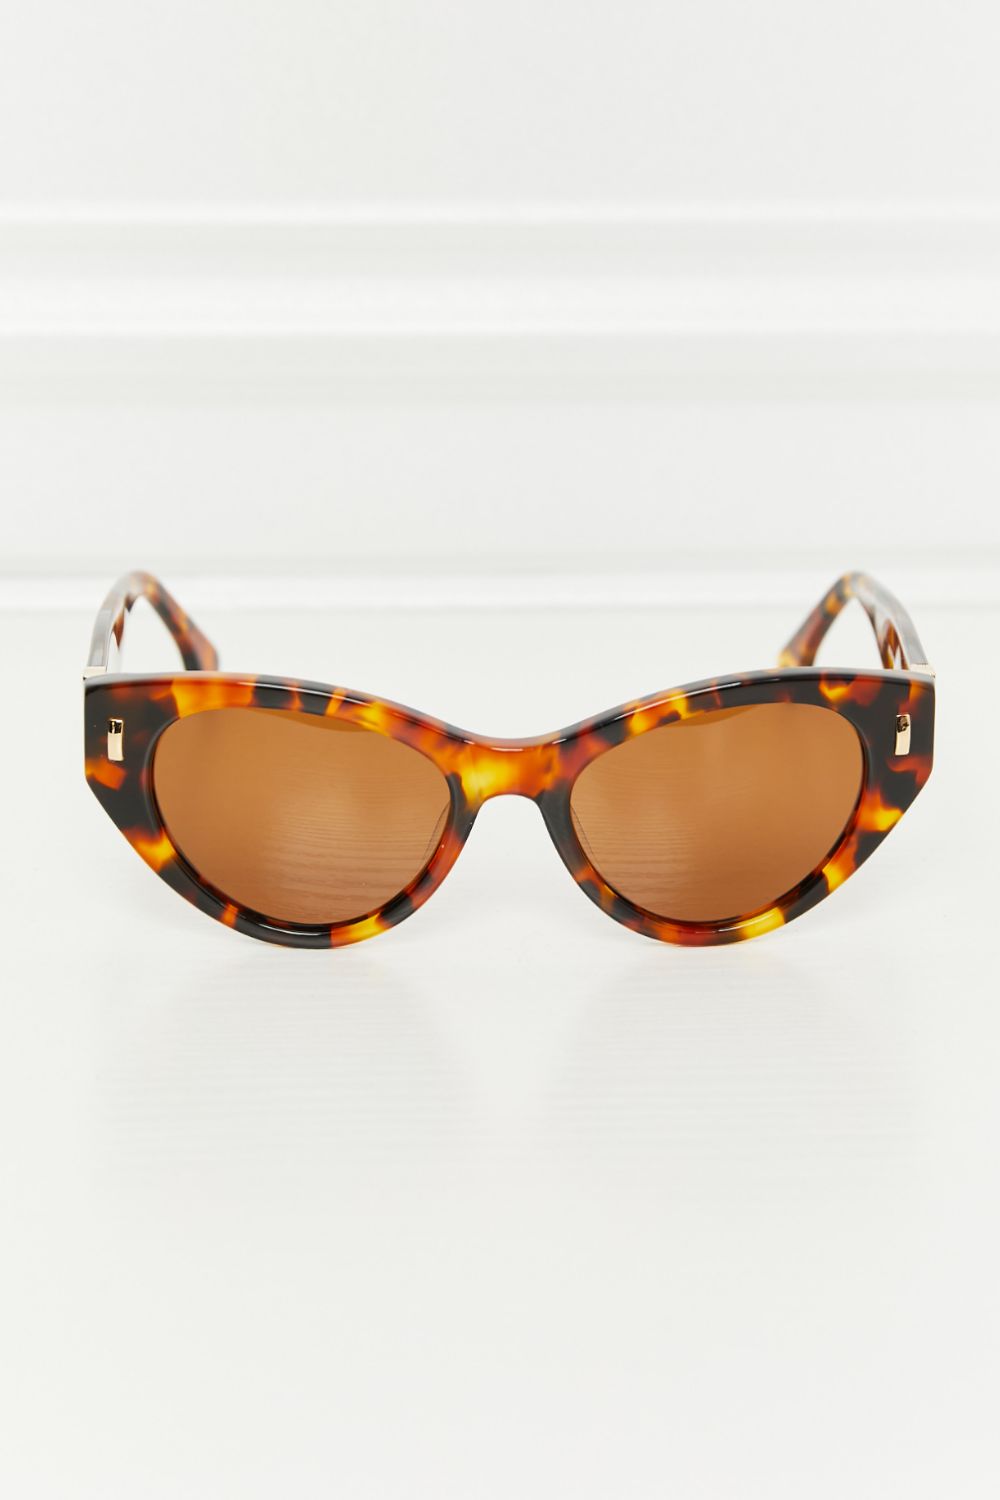 White Smoke Tortoiseshell Acetate Frame Sunglasses Sentient Beauty Fashions Apparel & Accessories